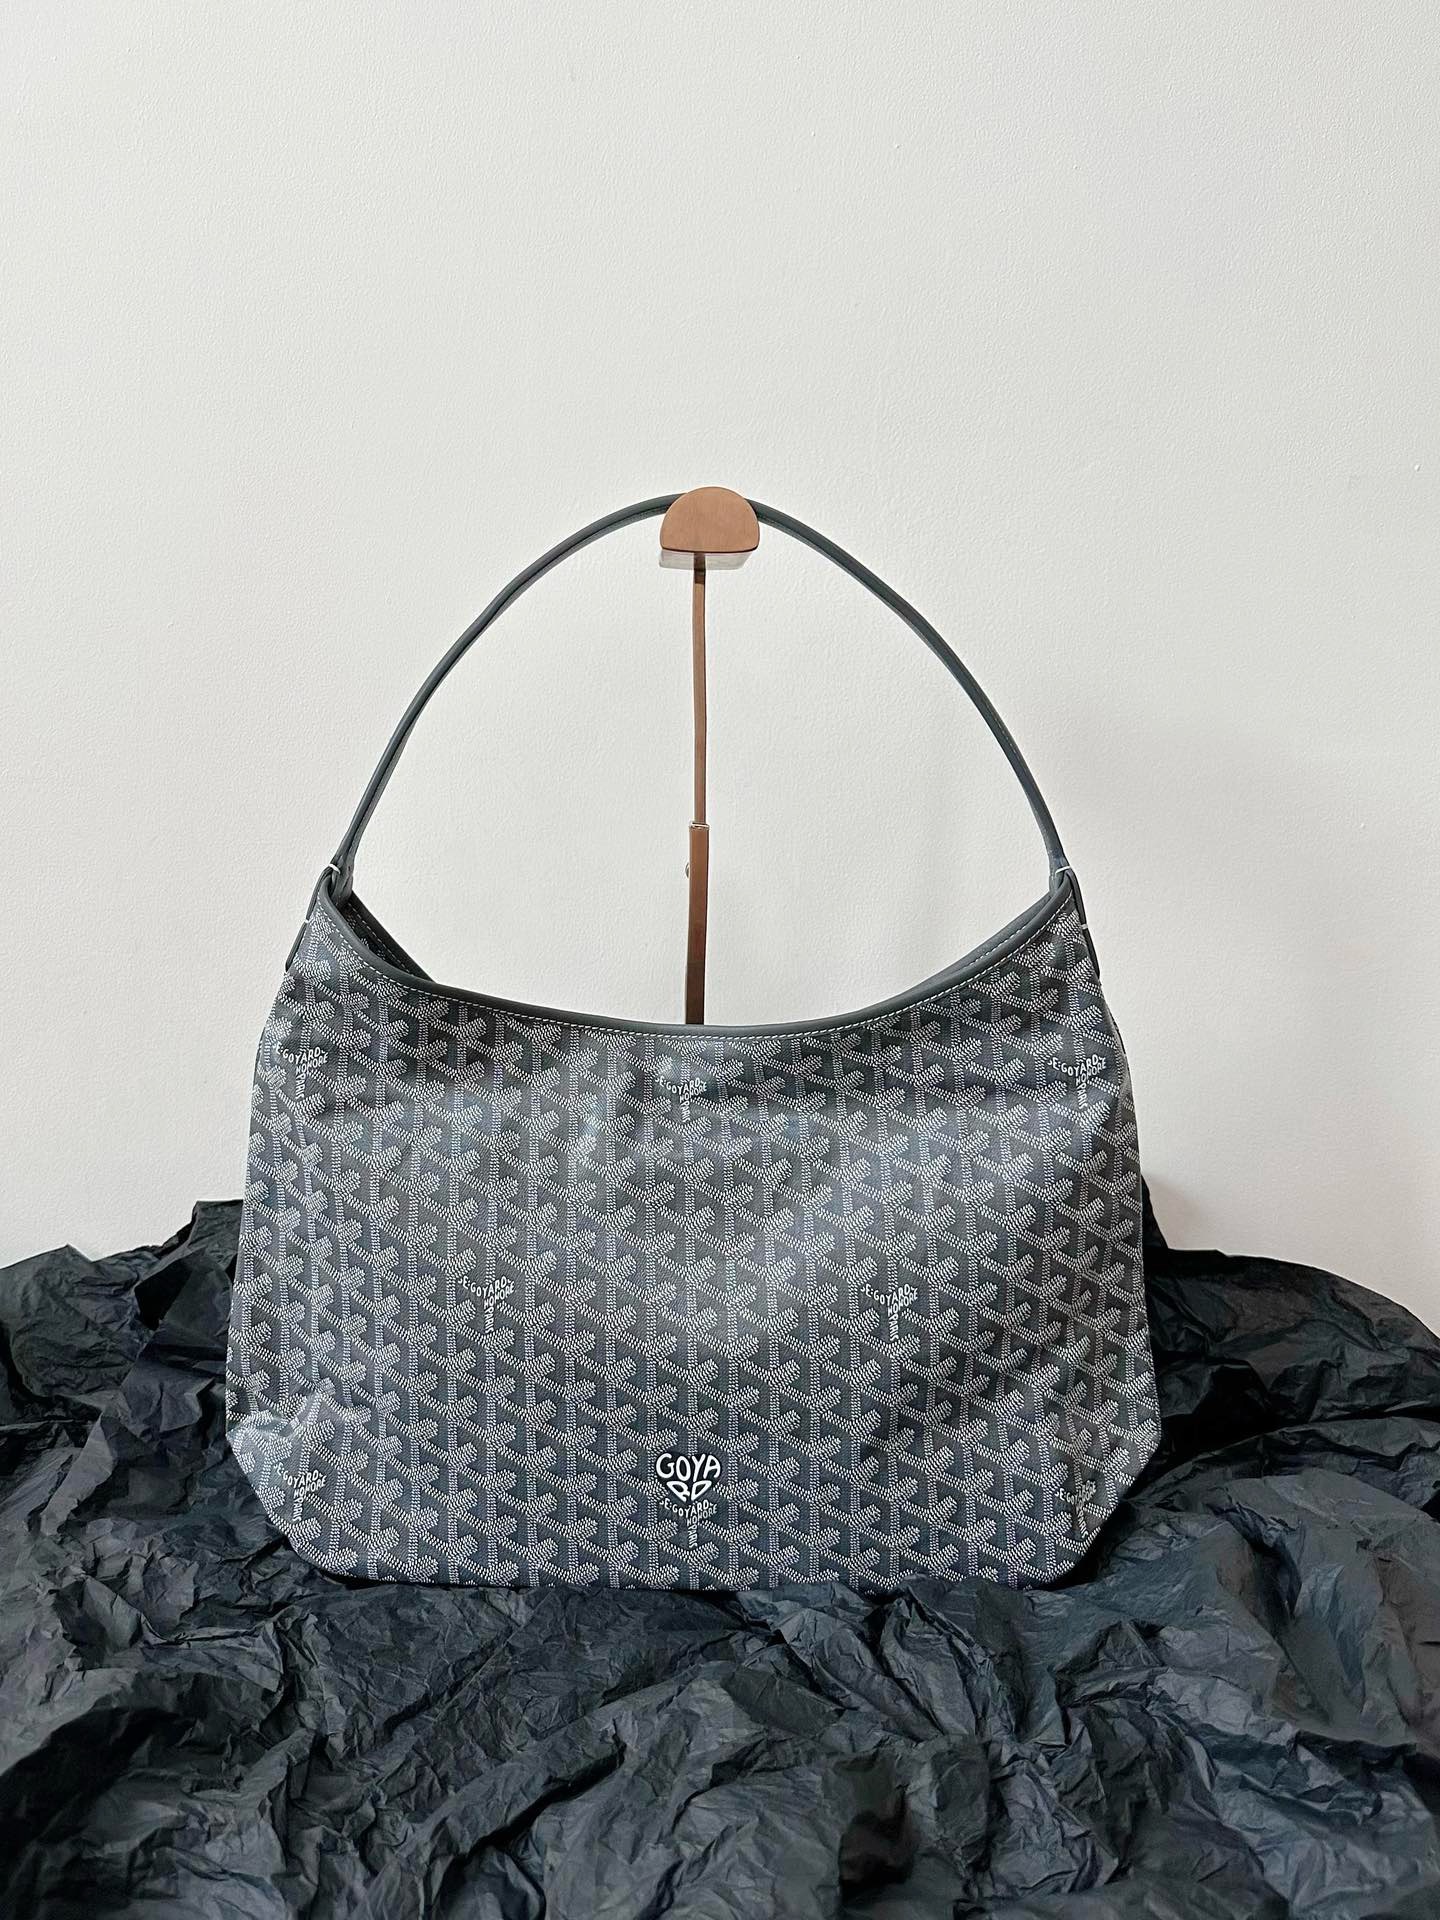 Goyard Bohème Hobo Bag With Heart Symbol - Kaialux